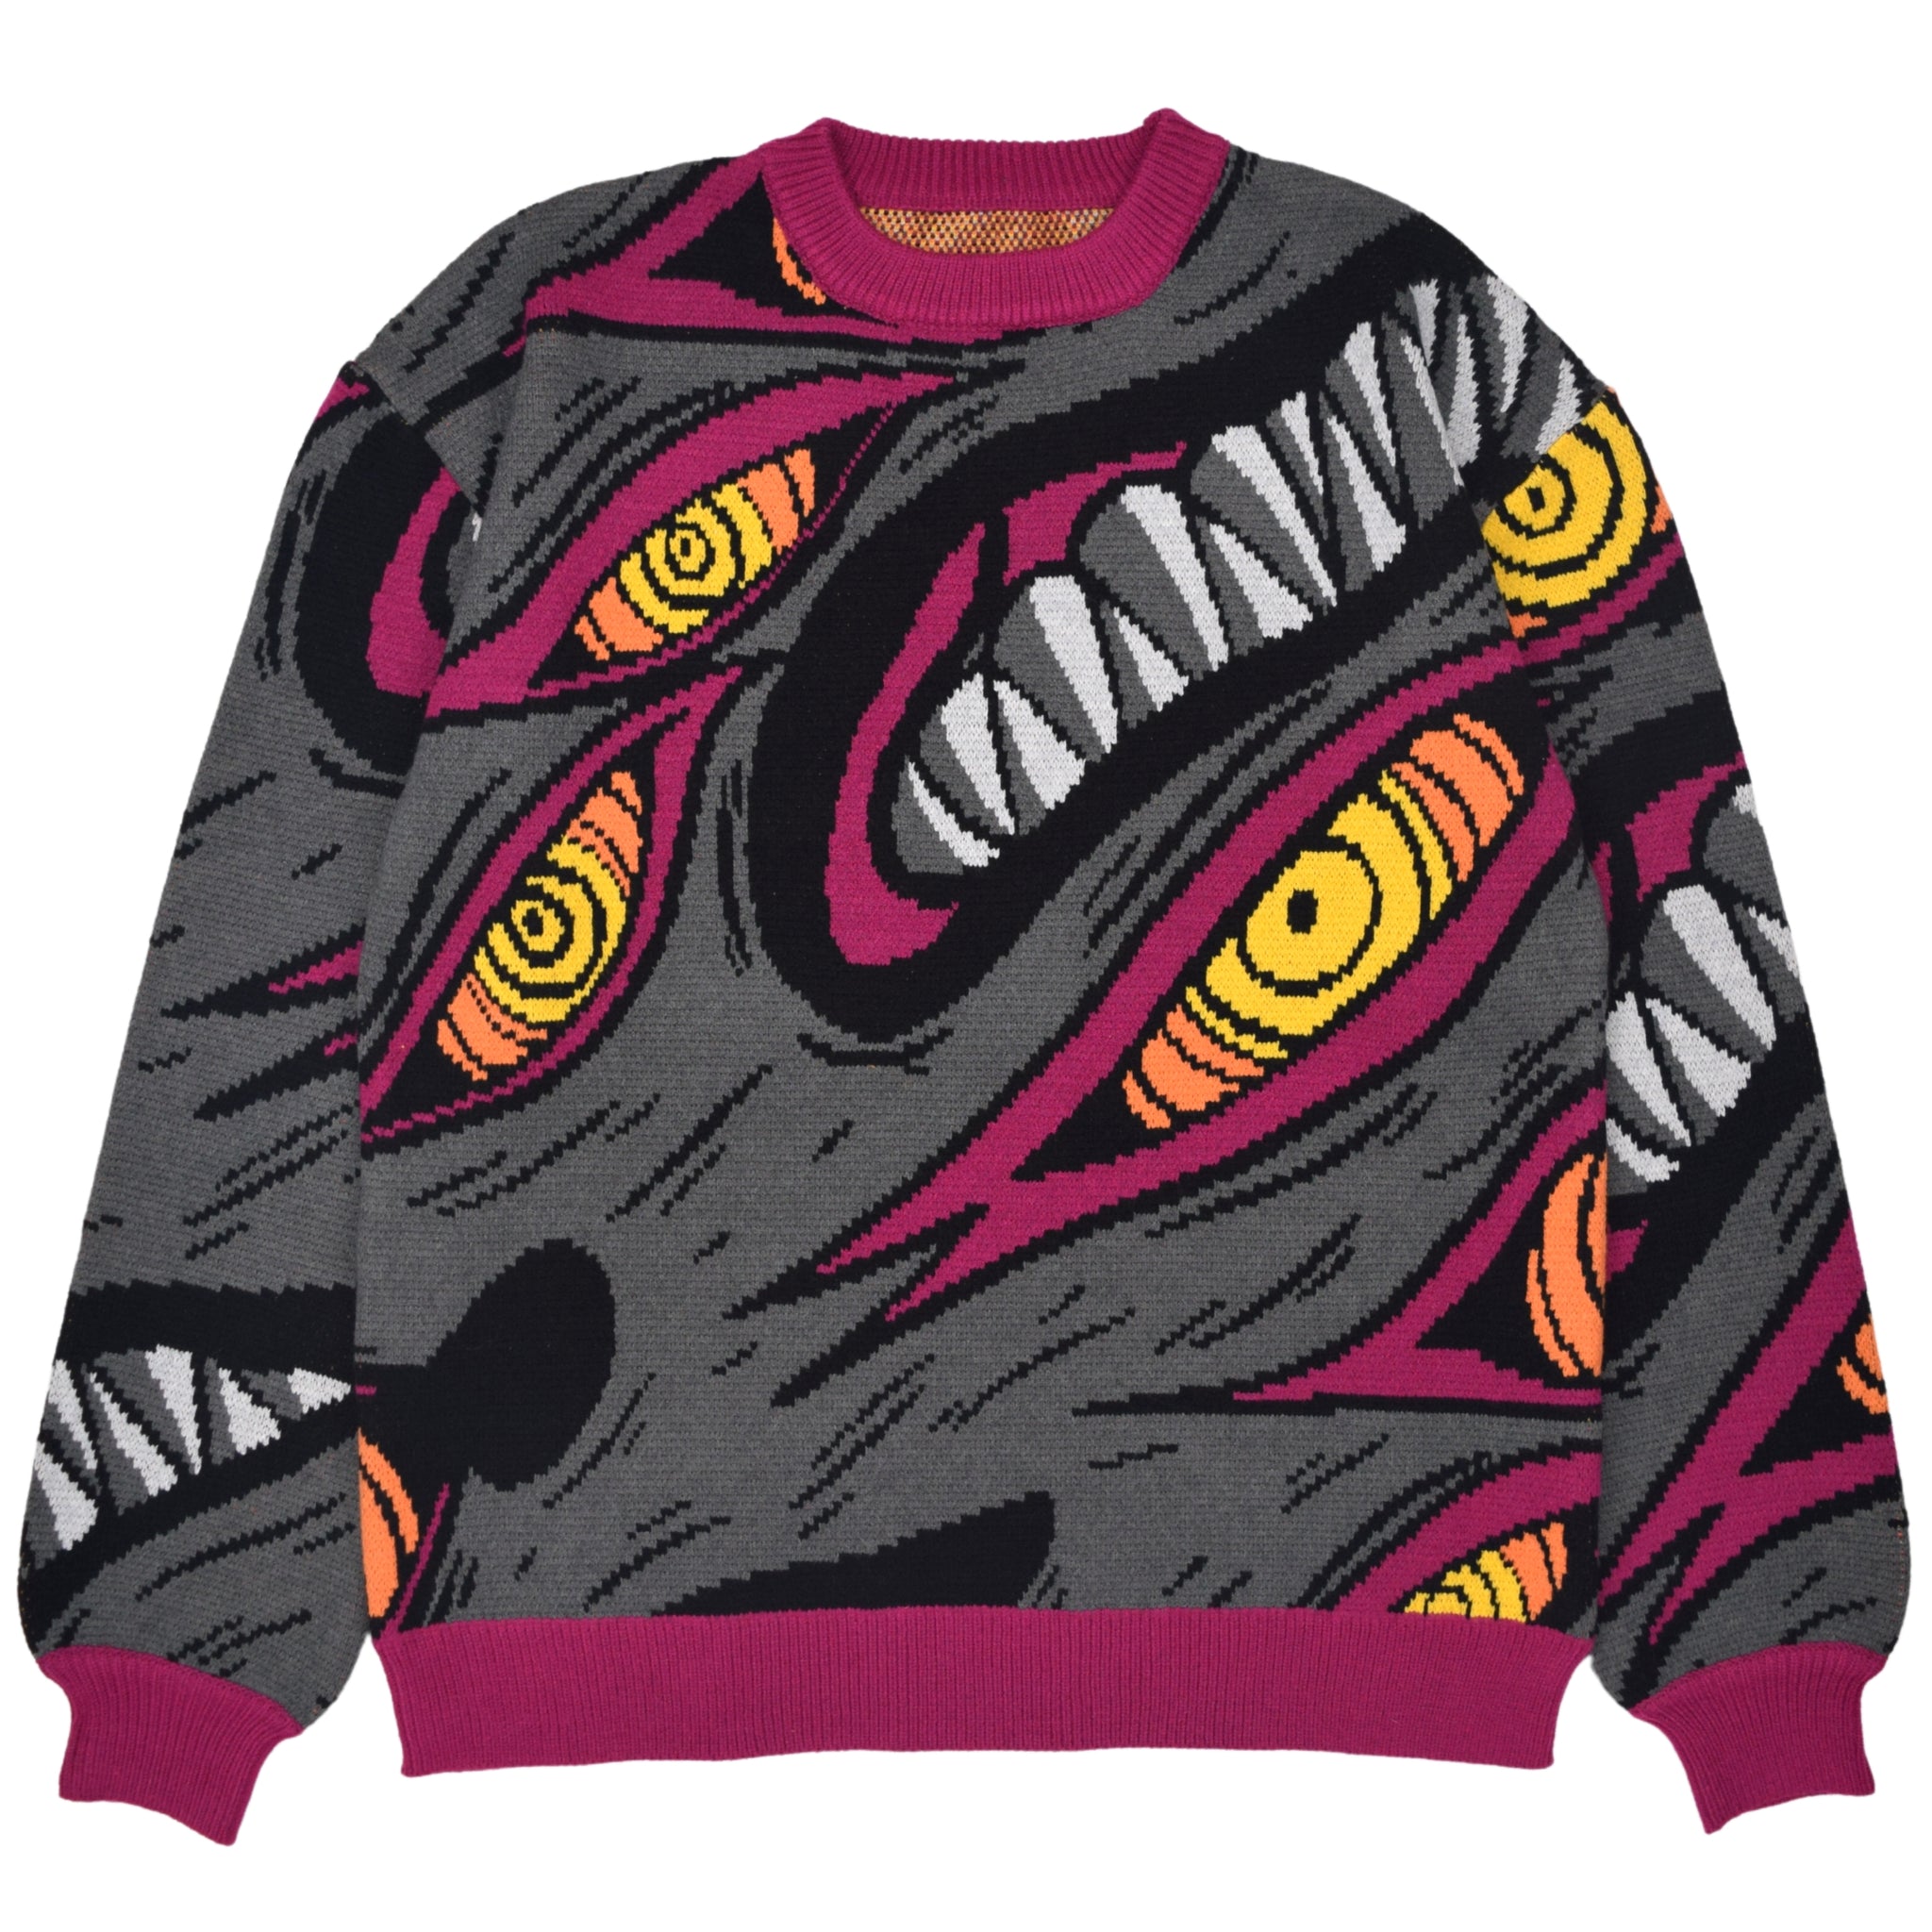 Dance Devil Dance Knit Sweater M